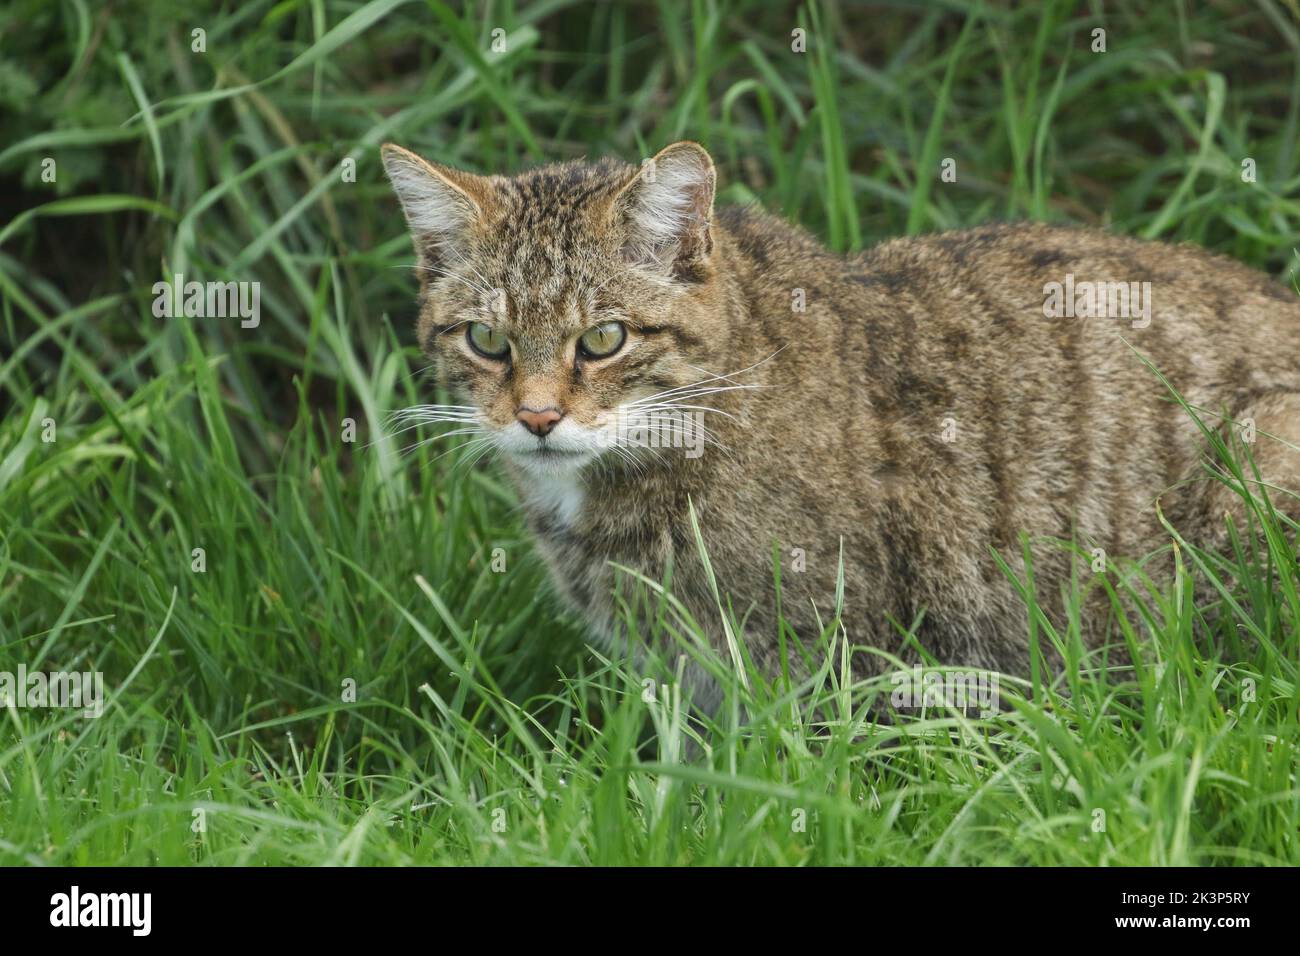 A Wildcat, Felis silvestiris, standing in the grass. Stock Photo